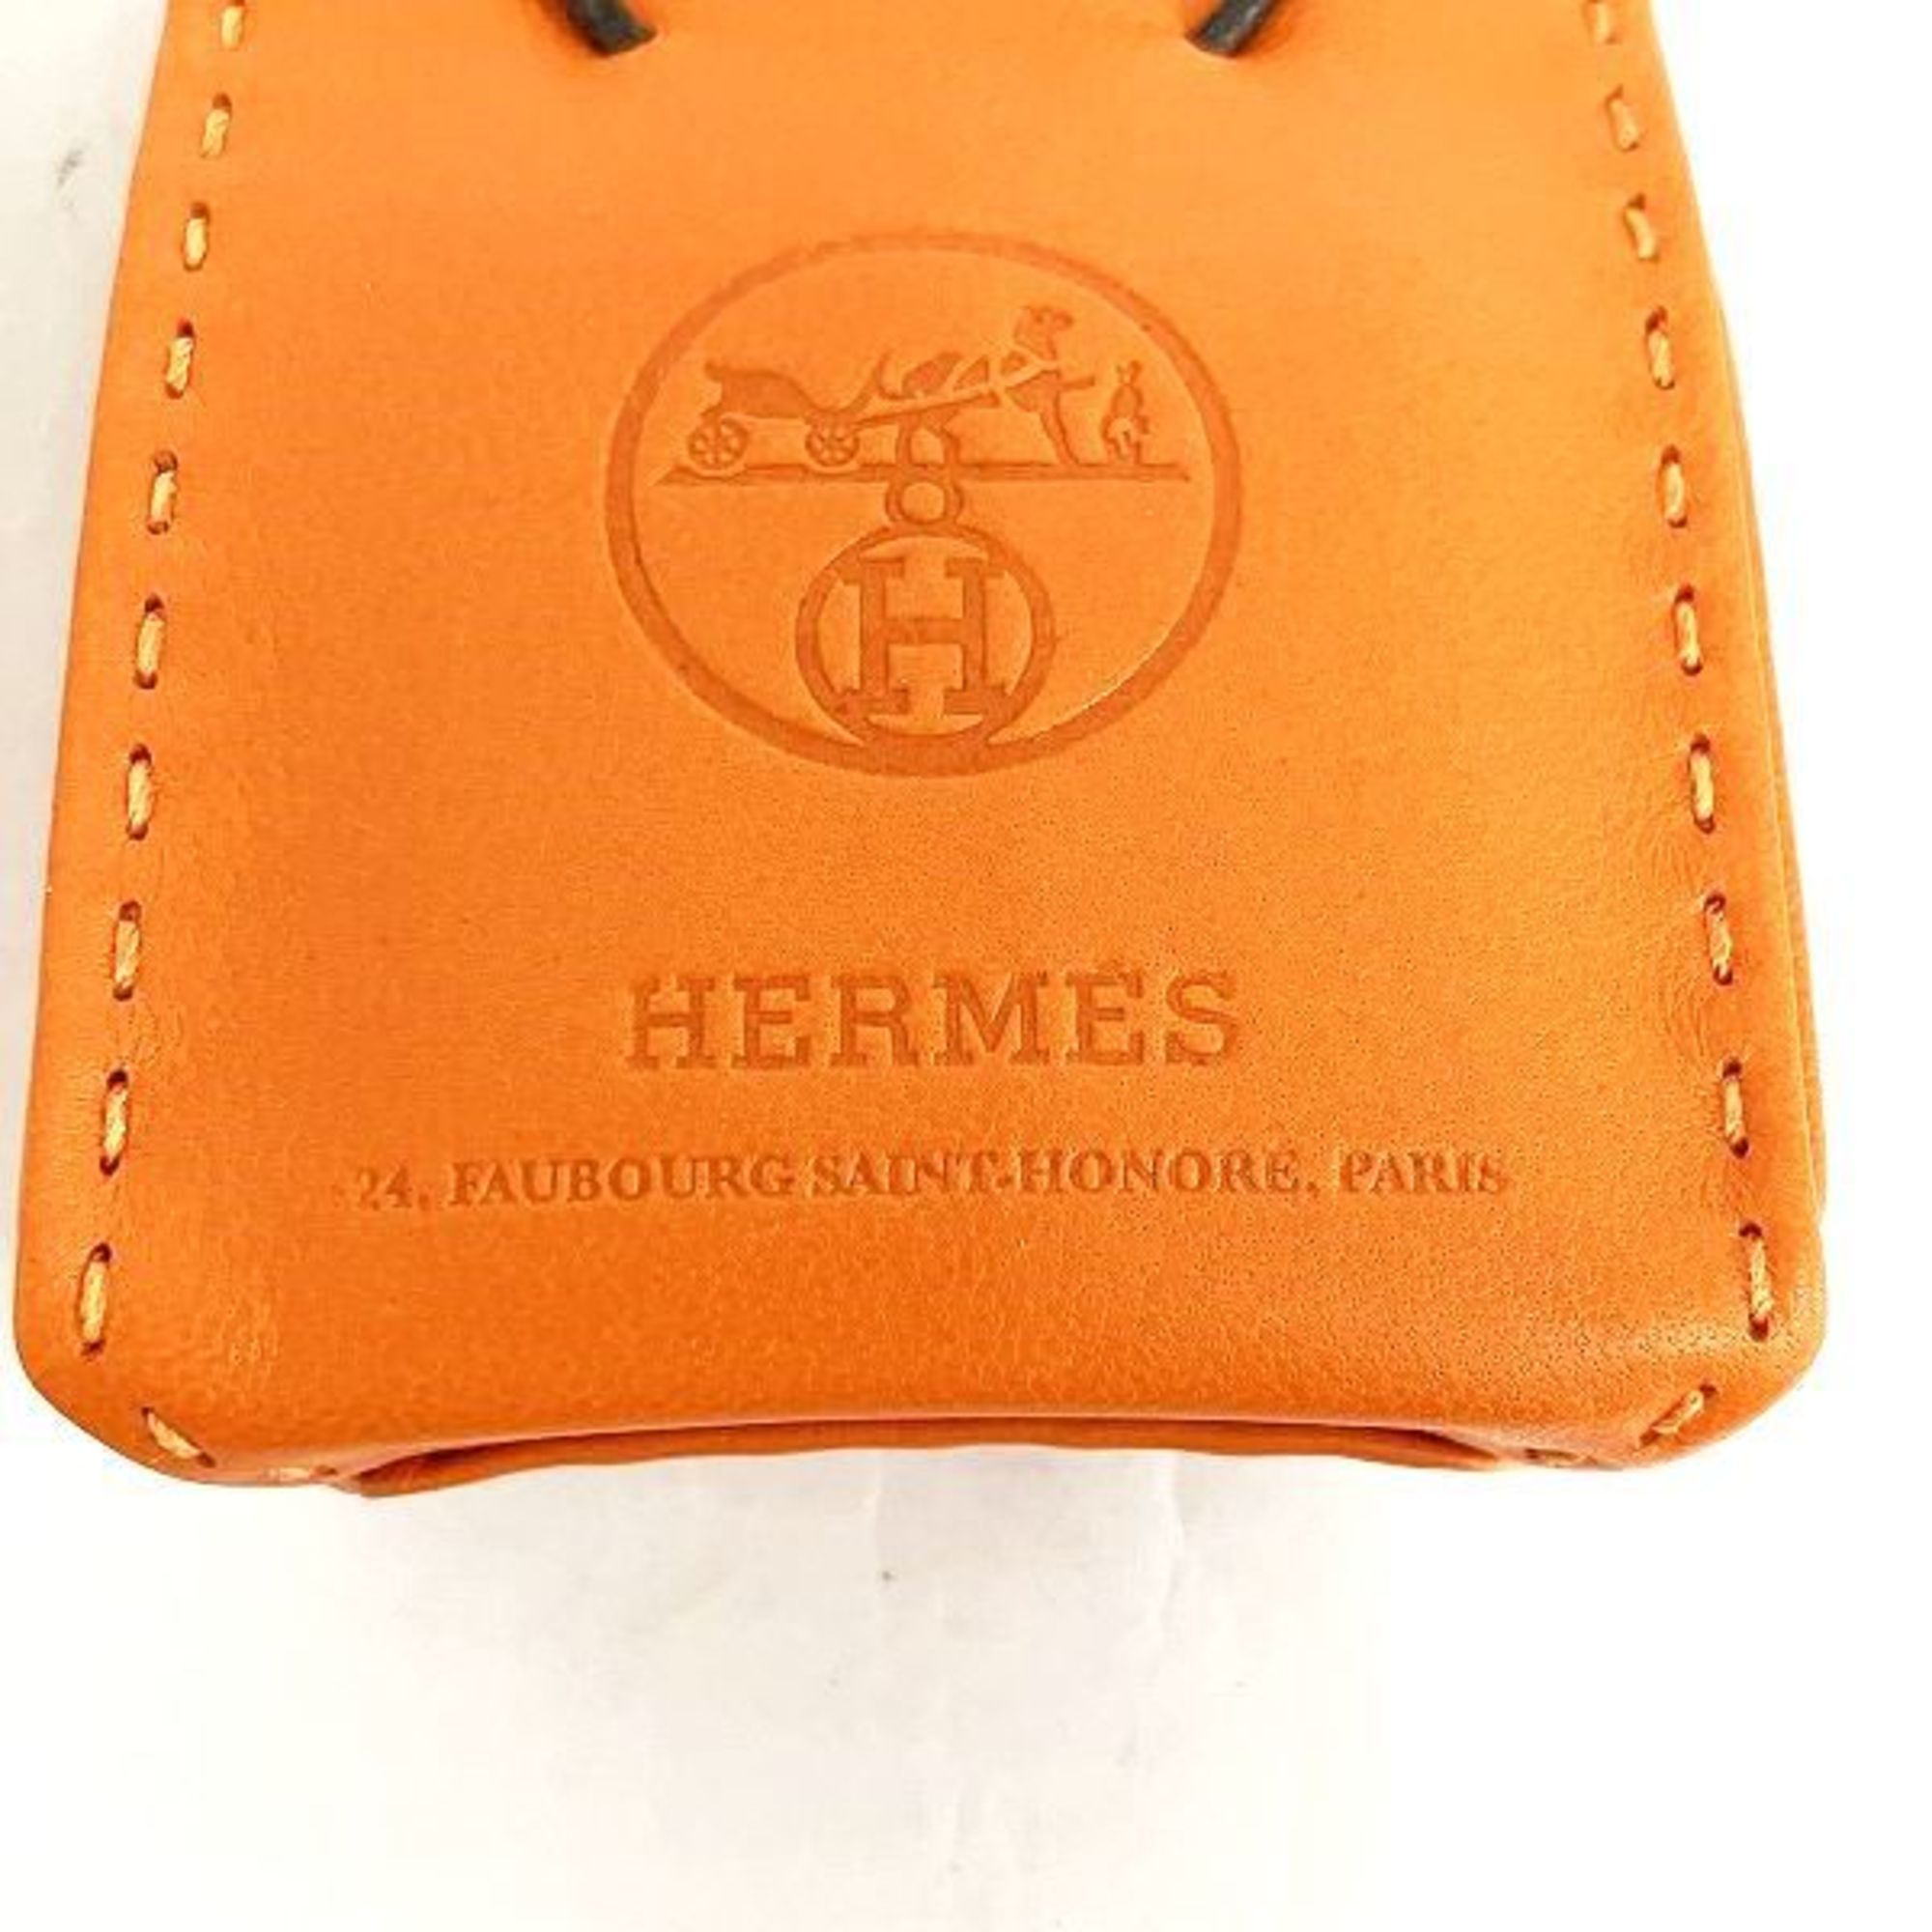 Hermes Sac Orange Shopper Type Charm Brand Accessories Bag Ladies